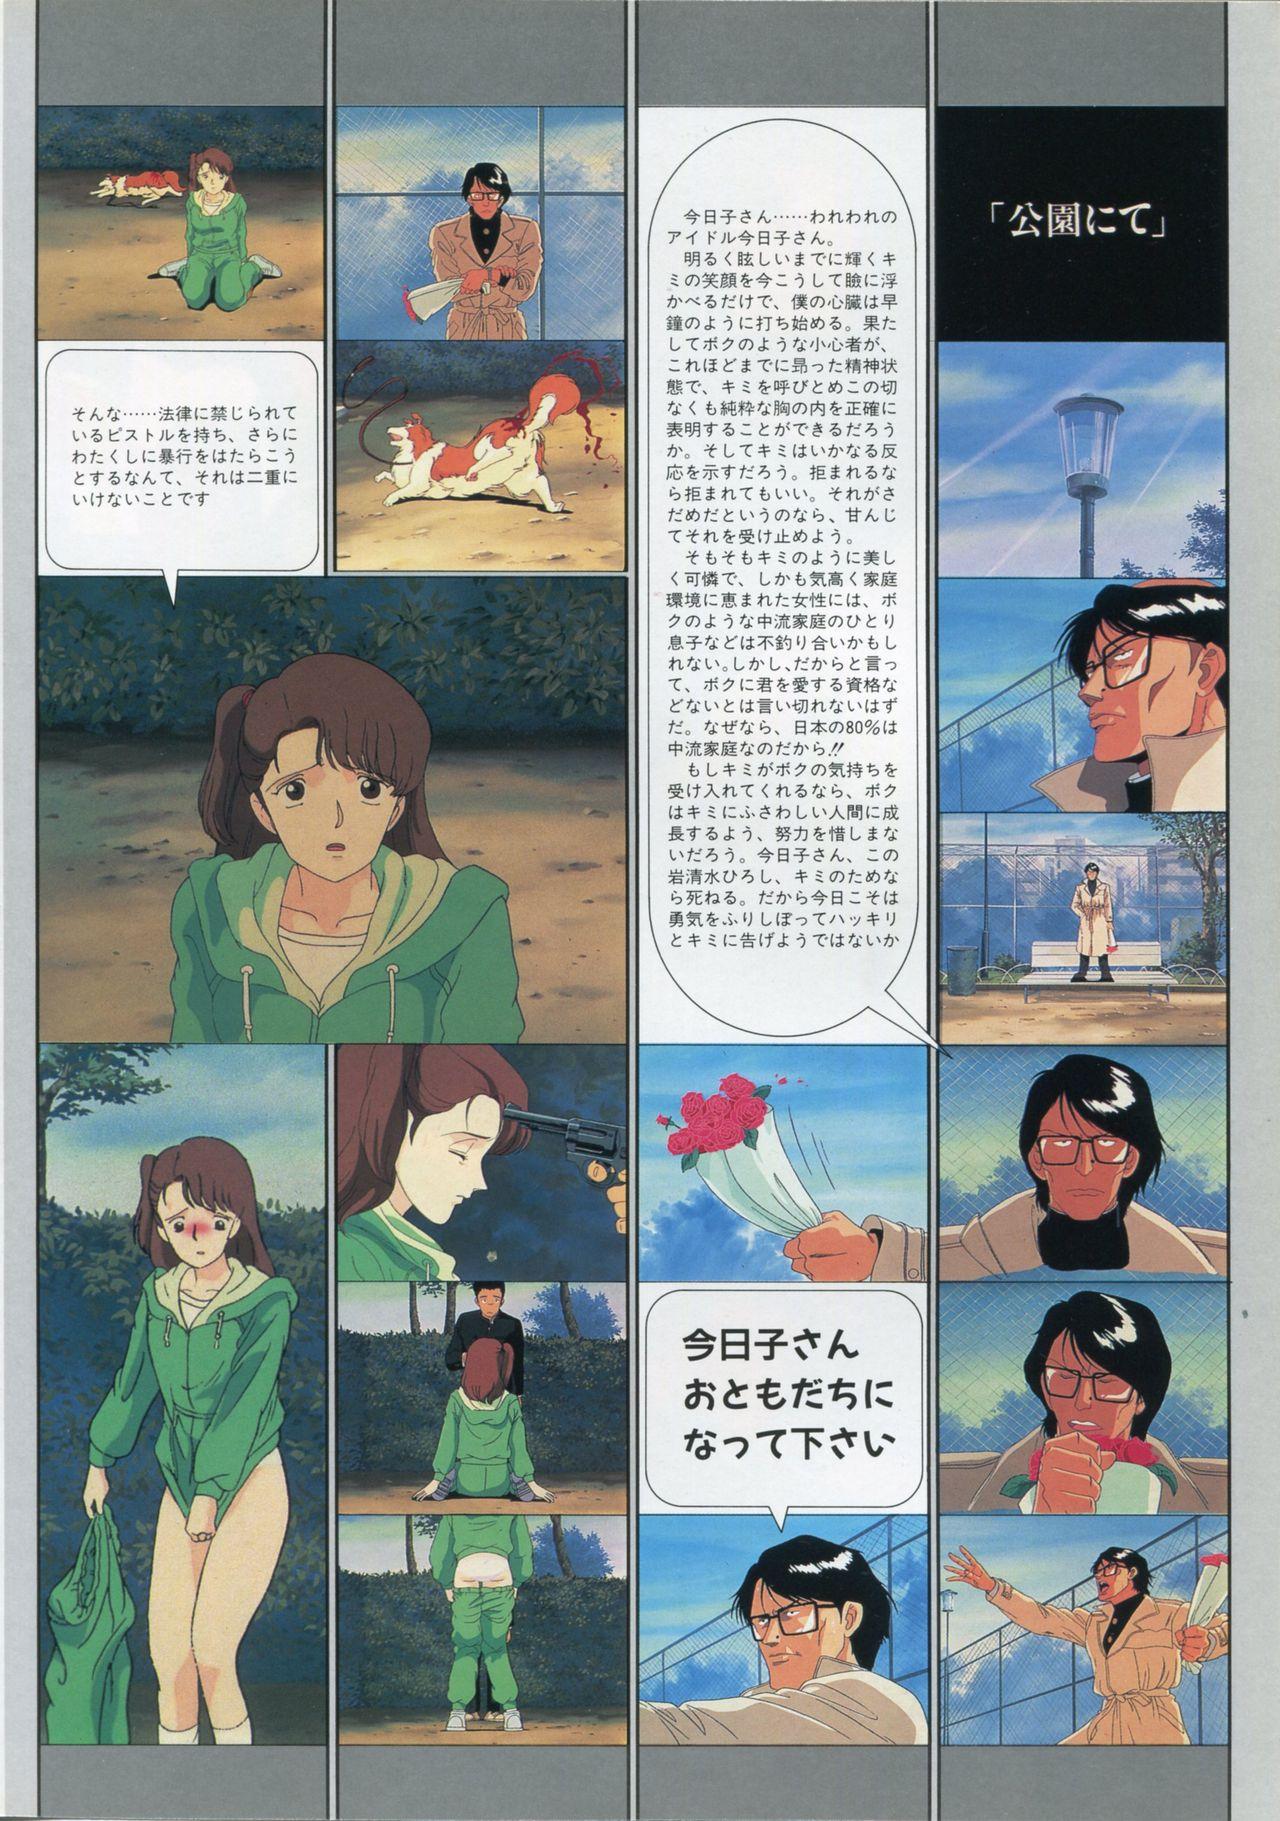 Bishoujo Anime Daizenshuu - Adult Animation Video Catalog 1991 25